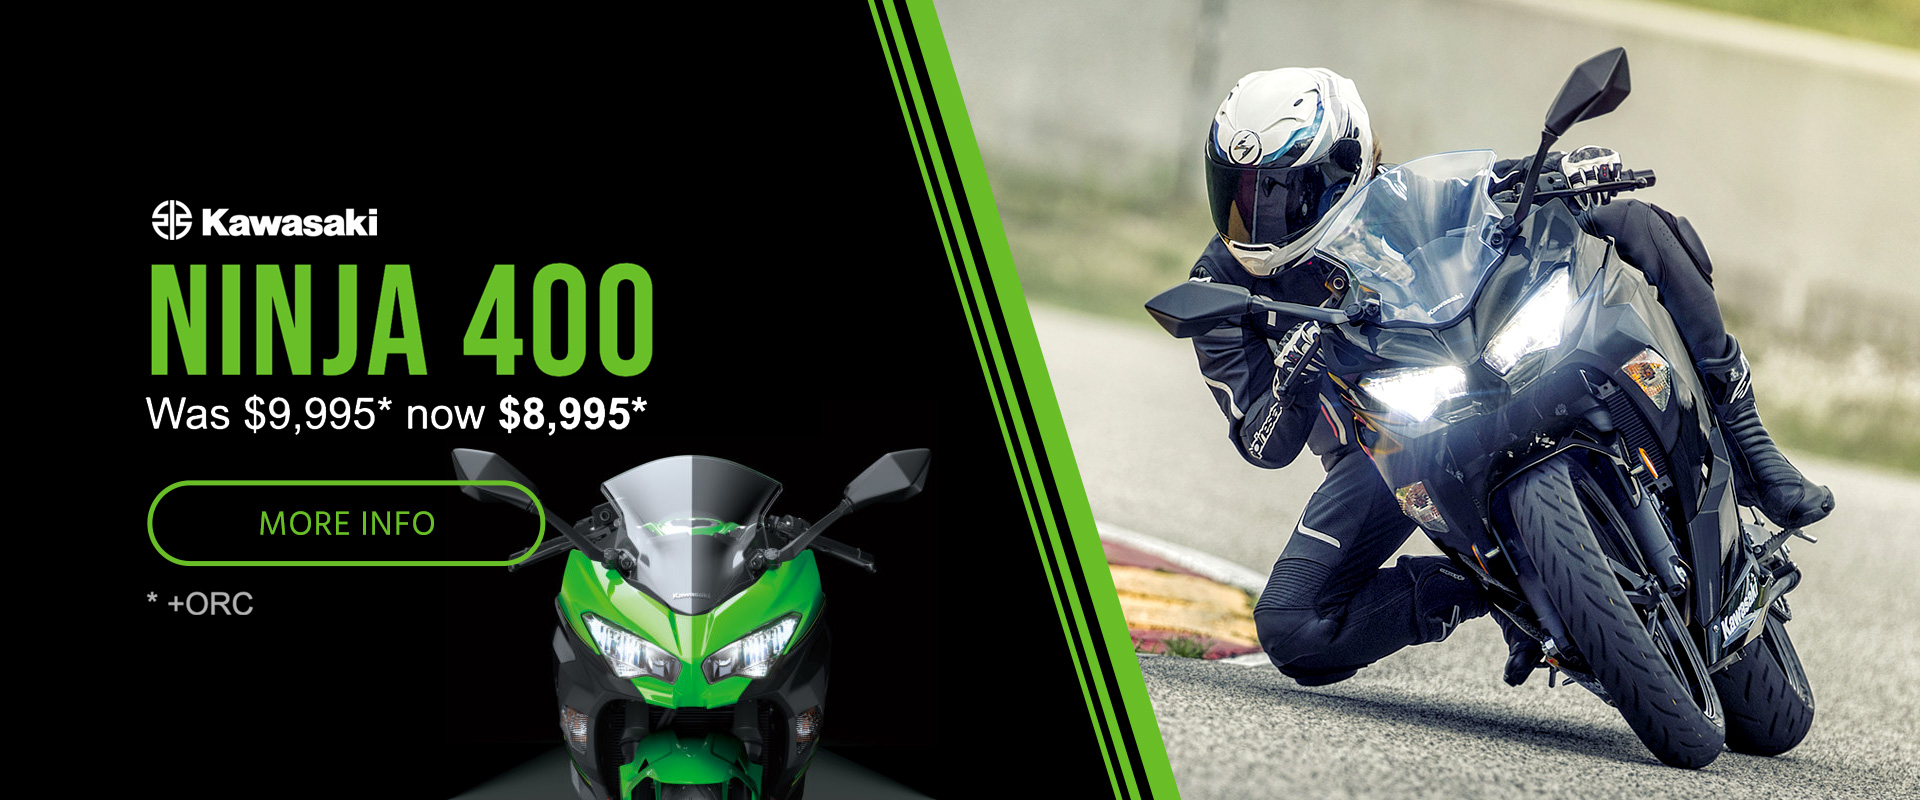 Kawasaki Ninja 400 Price Reduction